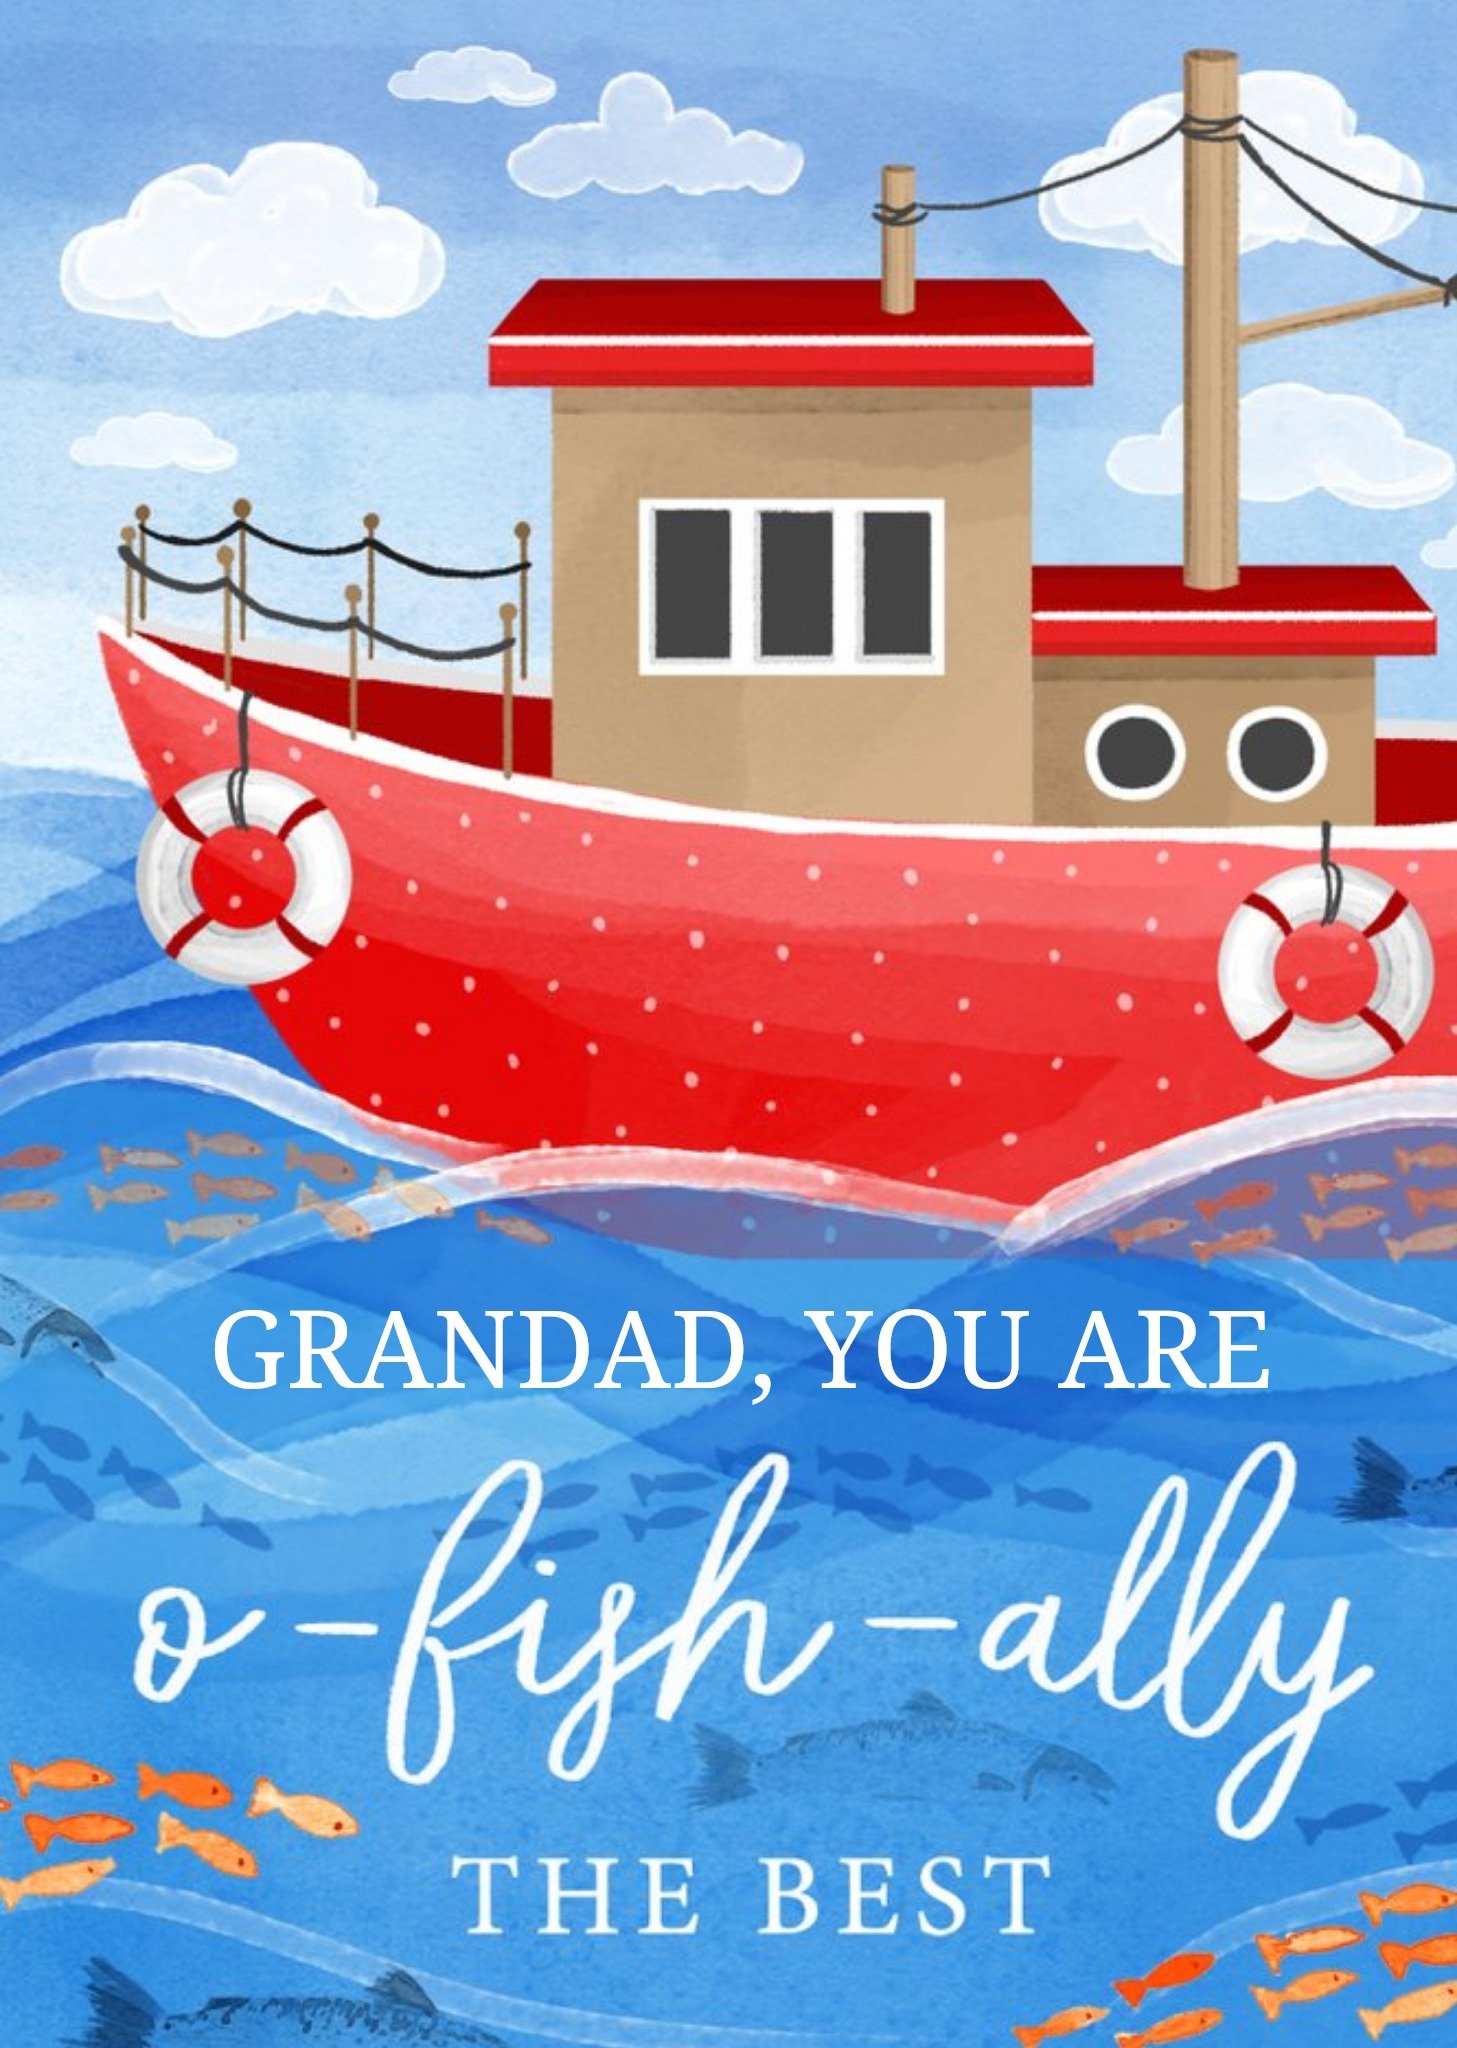 Okey Dokey Design O Fish Ally The Best Father's Day Card For Grandad Ecard